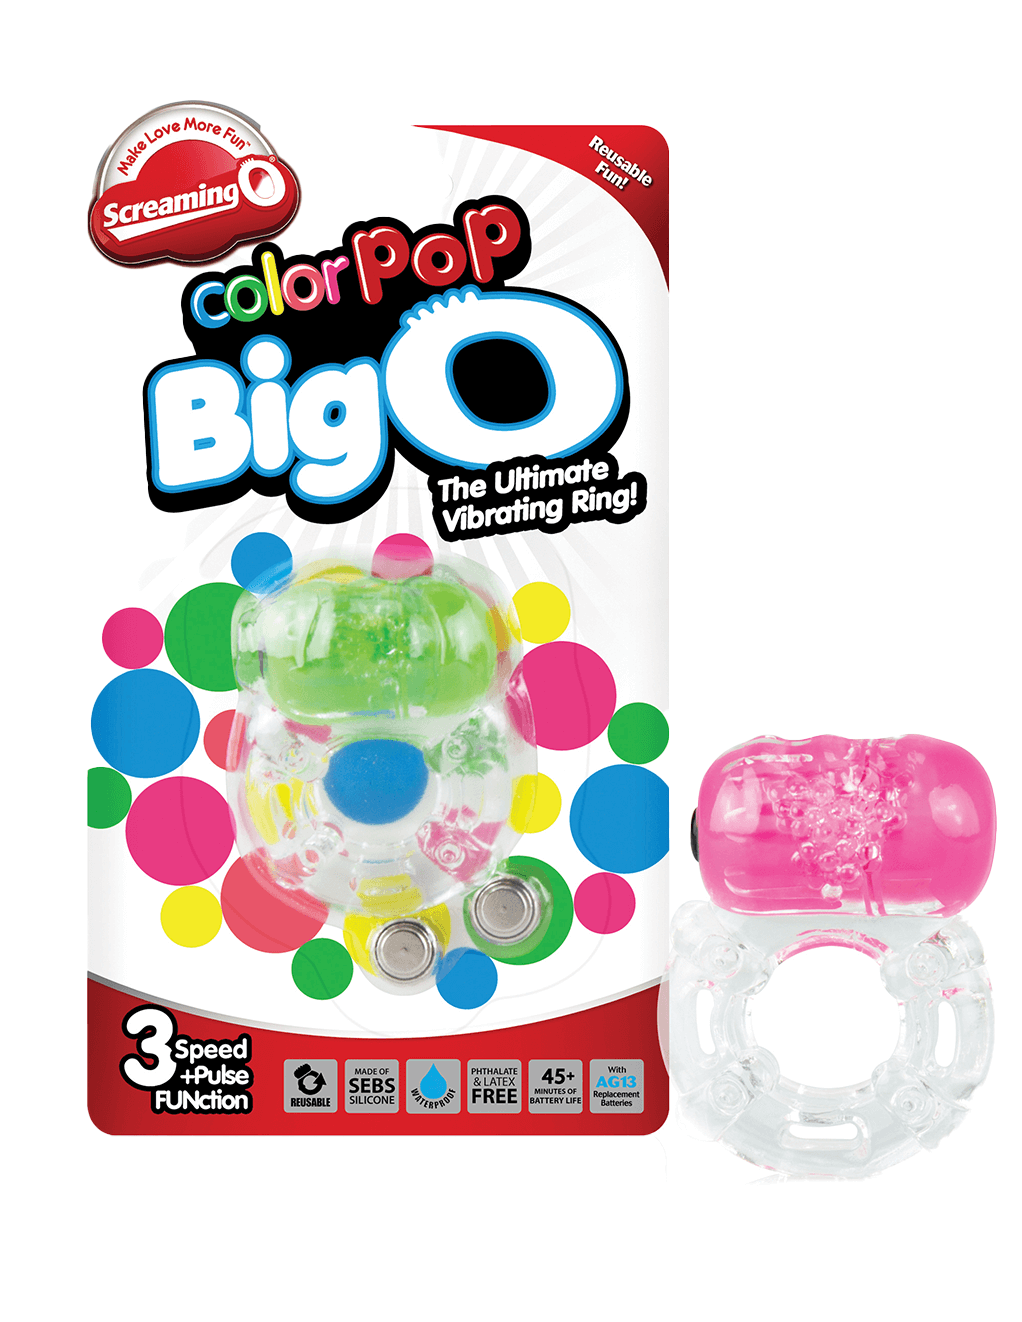 Screaming O Colorpop Big O - Packaging